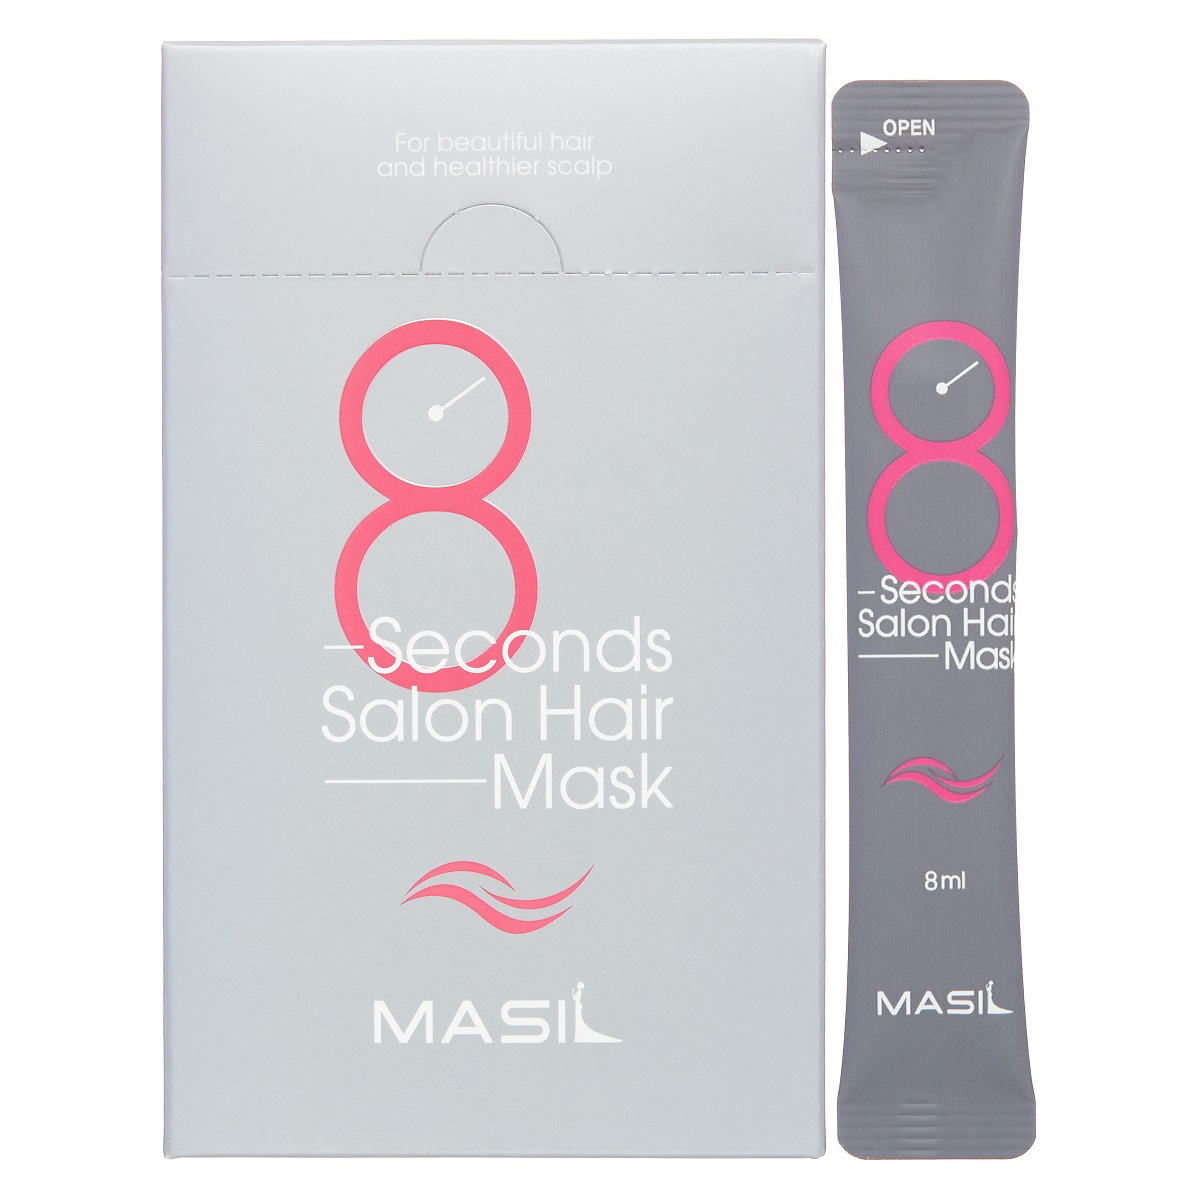 Masil Маска для быстрого восстановления волос 8 Seconds Salon Hair Mask, 20 х 8 мл (Masil, )